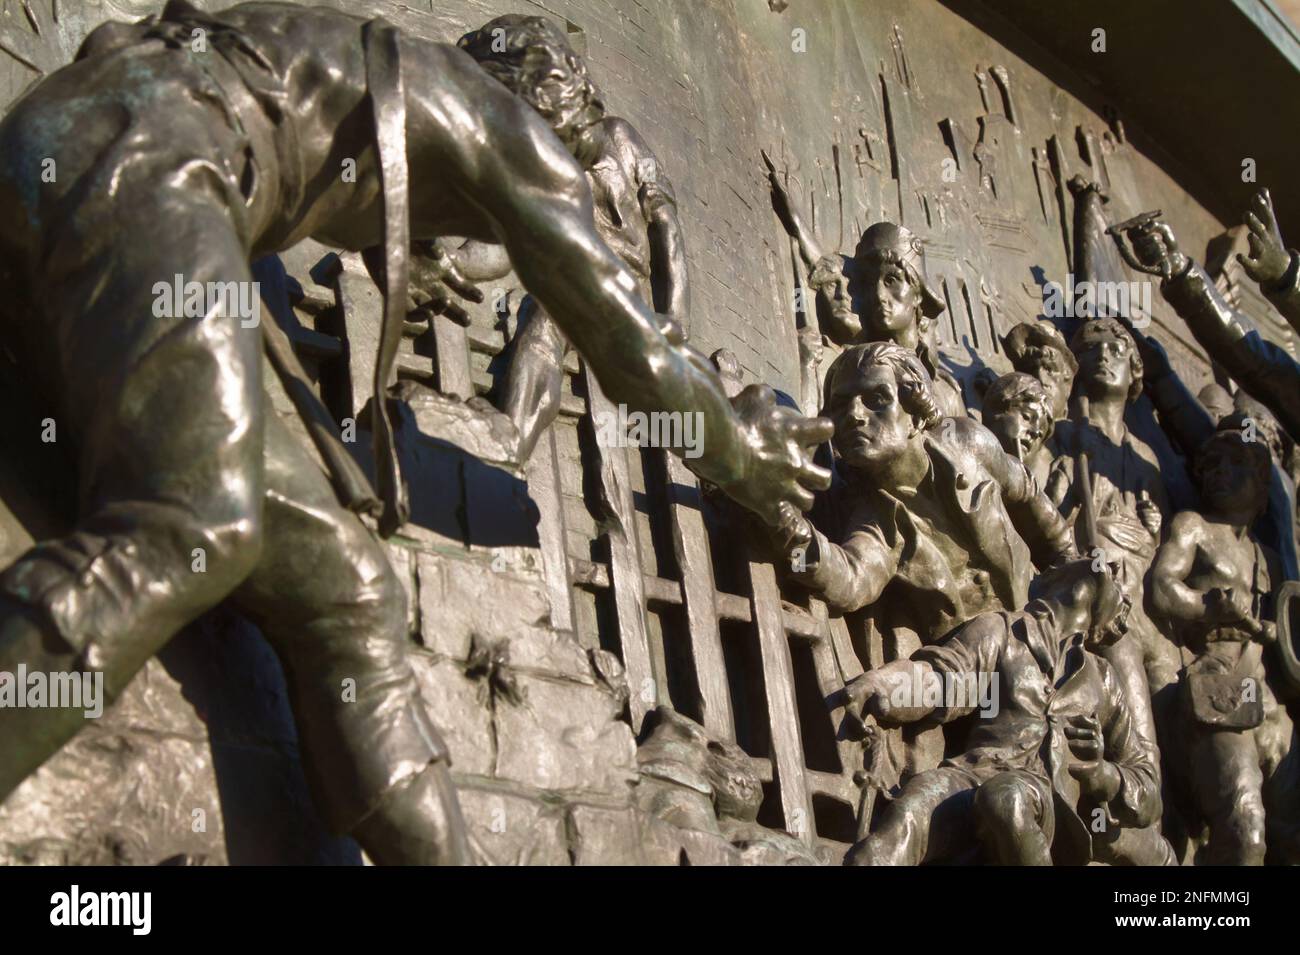 Detail Of The Storming Of The Bastille Bronze High Relief Plaque On the Base OF The Monument To The Republic, Place De La Republique, Paris France Stock Photo